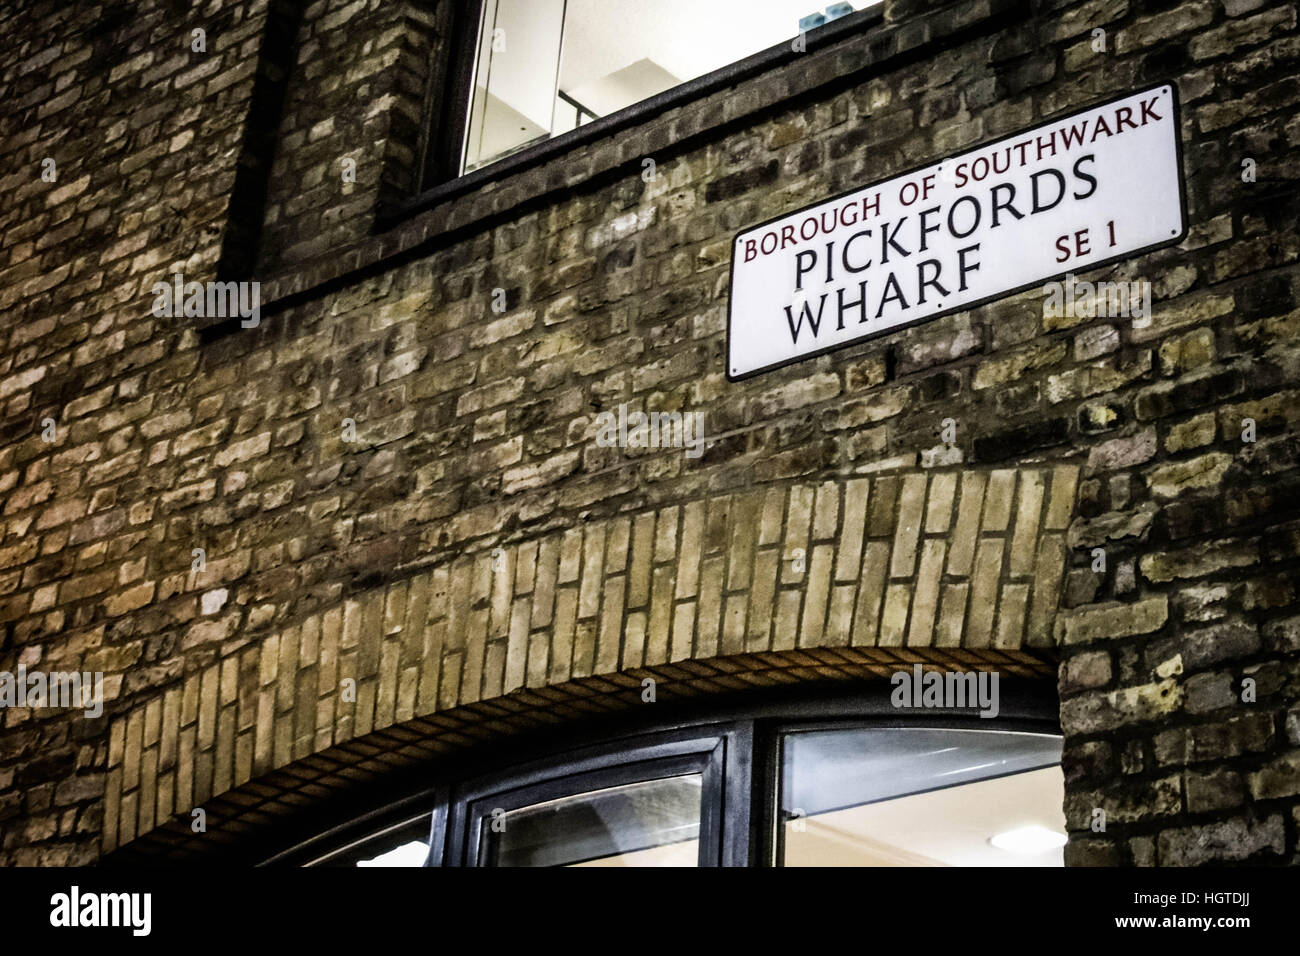 Pickfords Wharf Street Sign SE1 Banque D'Images